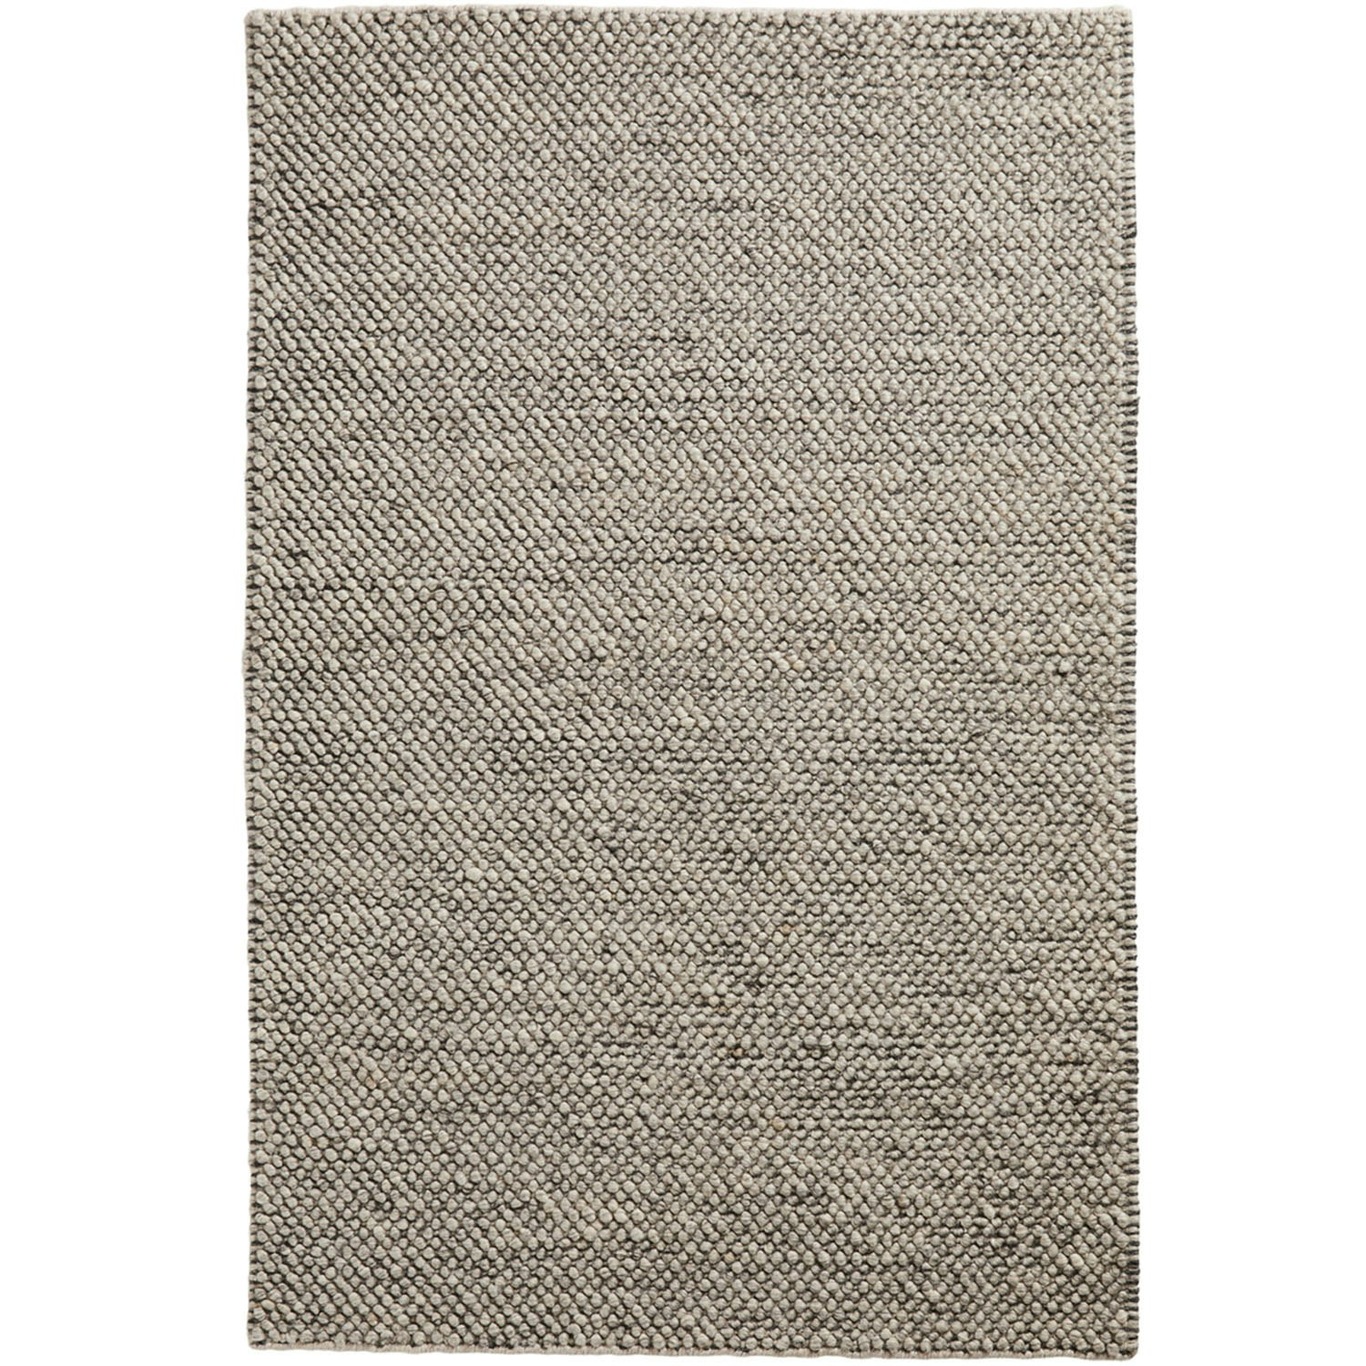 Tact Teppich Wolle 200x300 cm, Dunkelgrau